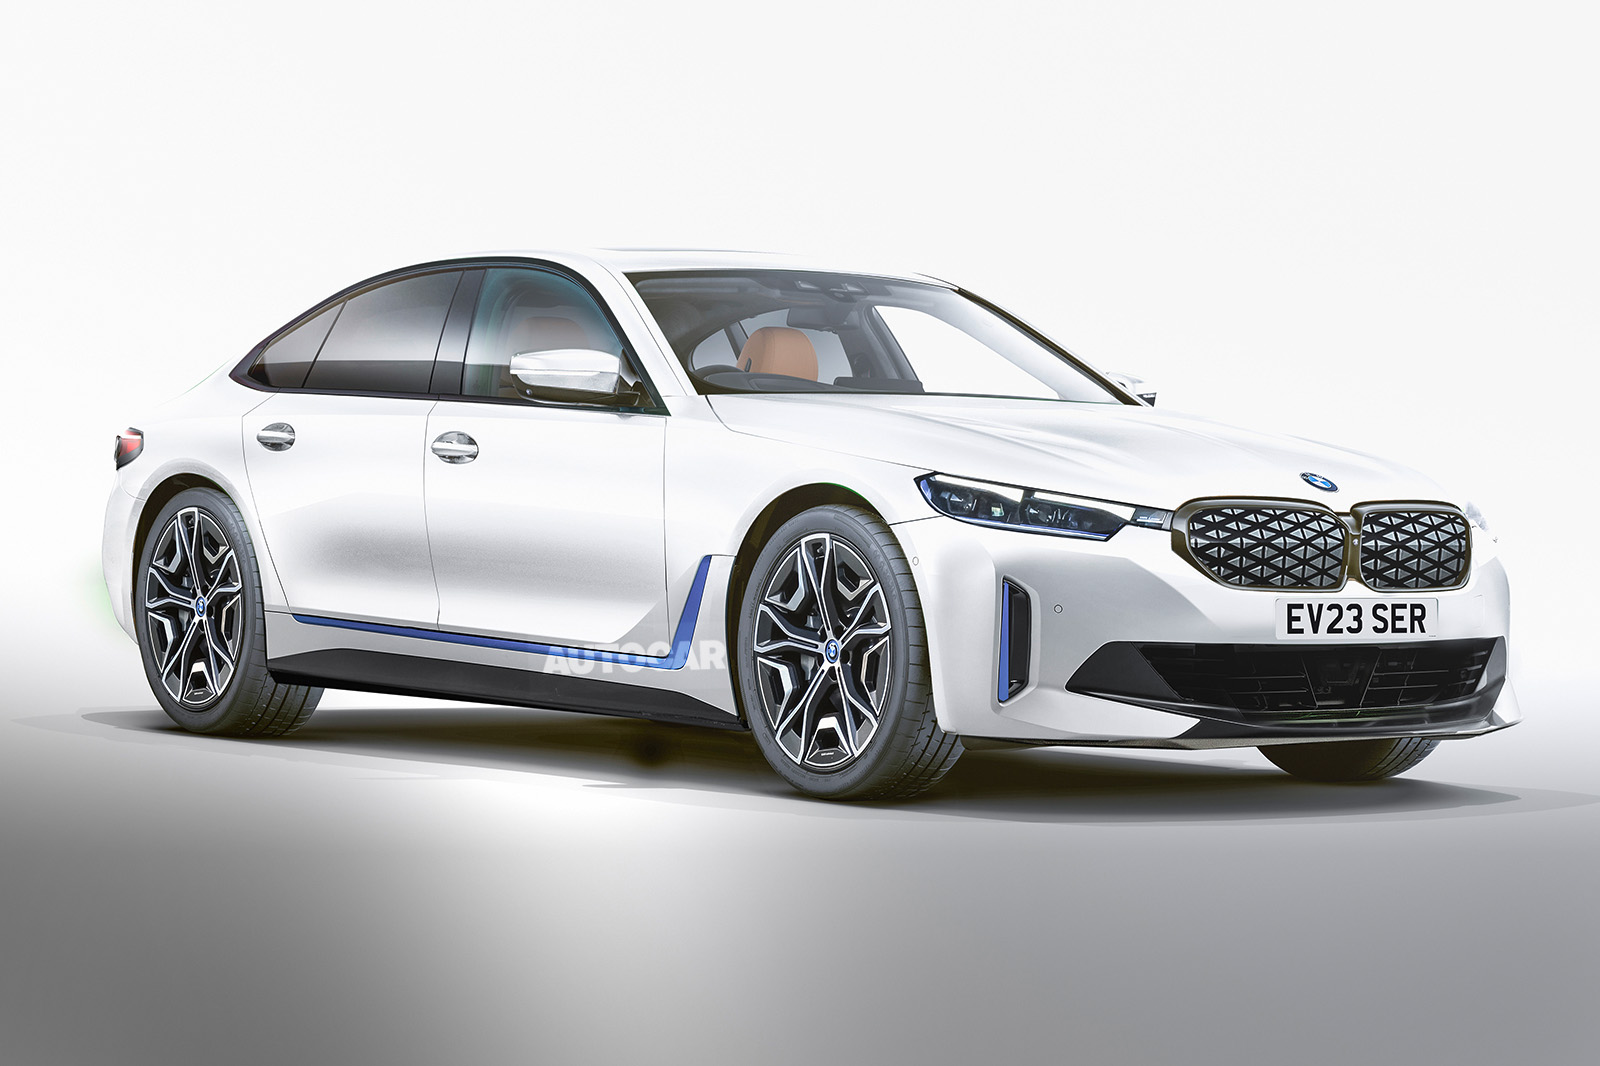 2023 New BMW Electric Car Price